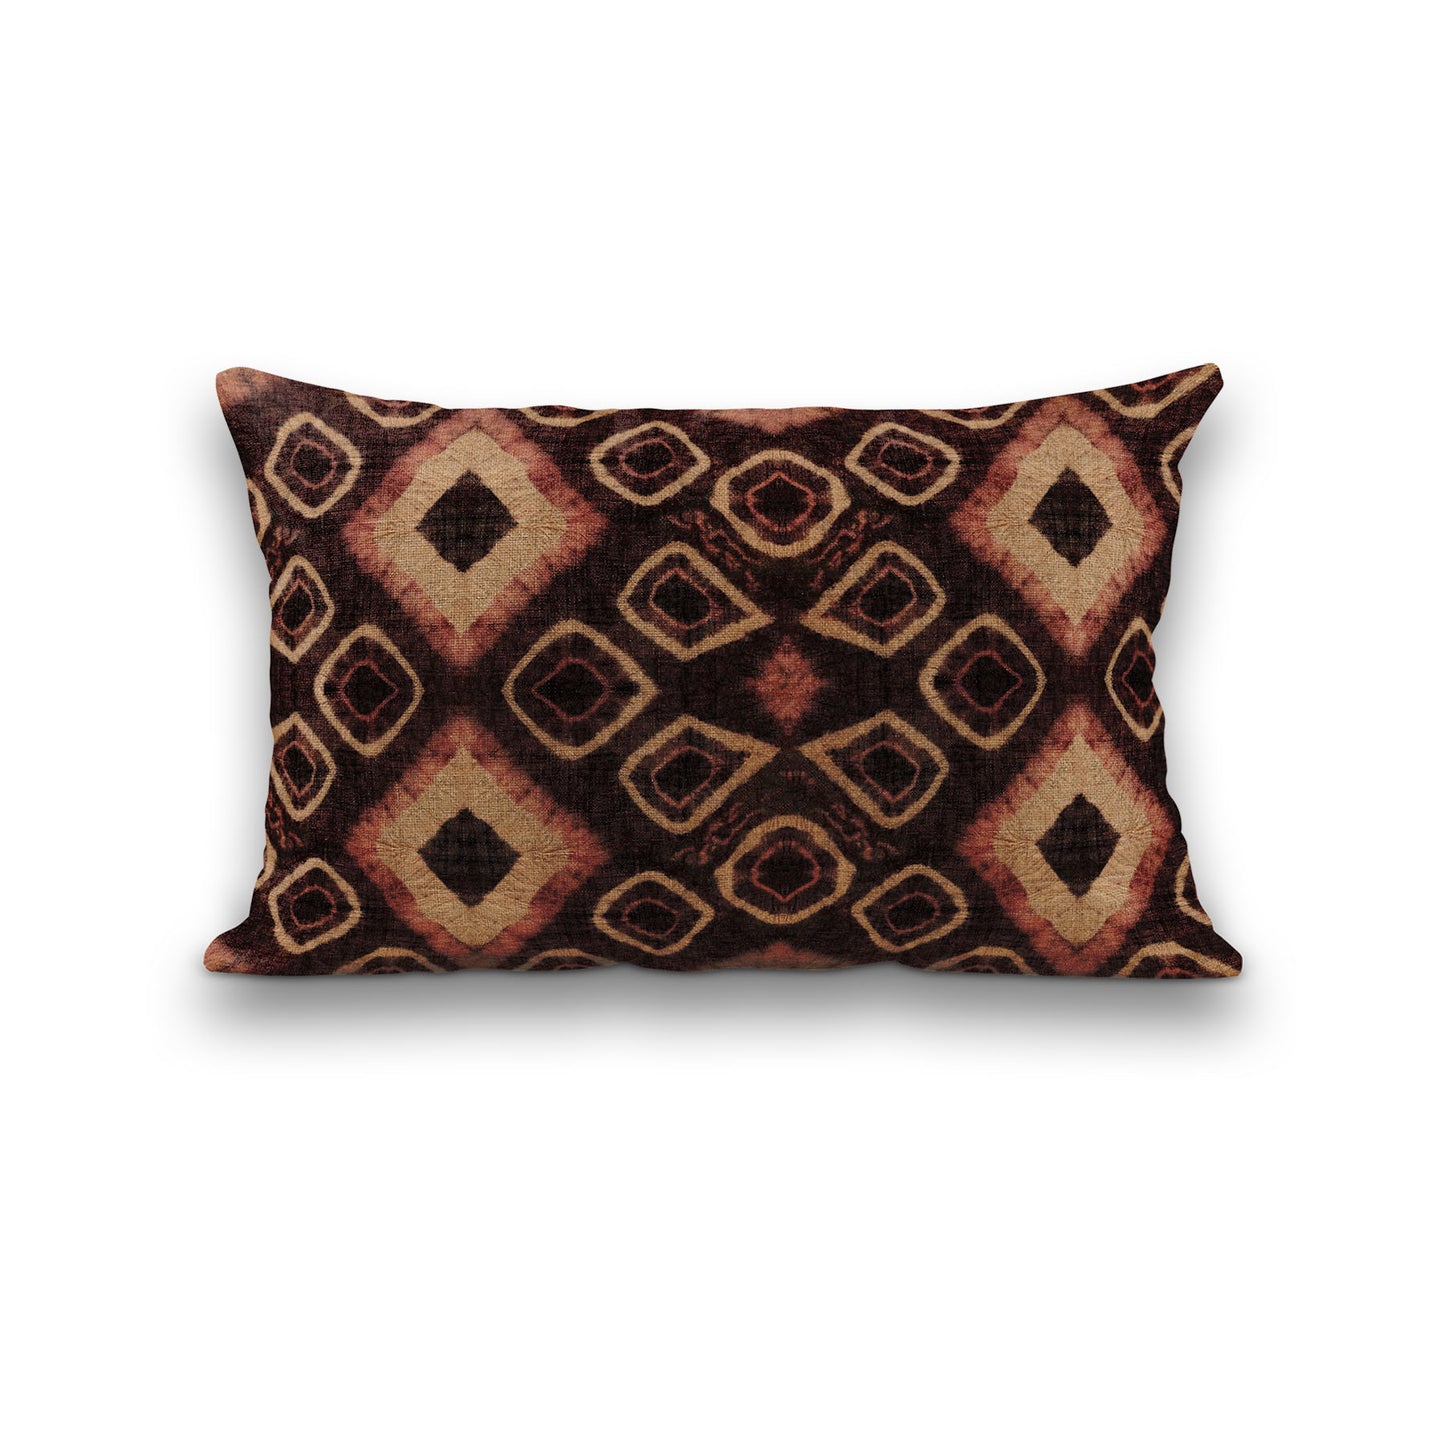 AnitaveeTextile African Fabric Tribal Pillows in Kuba Print - 3 Sizes